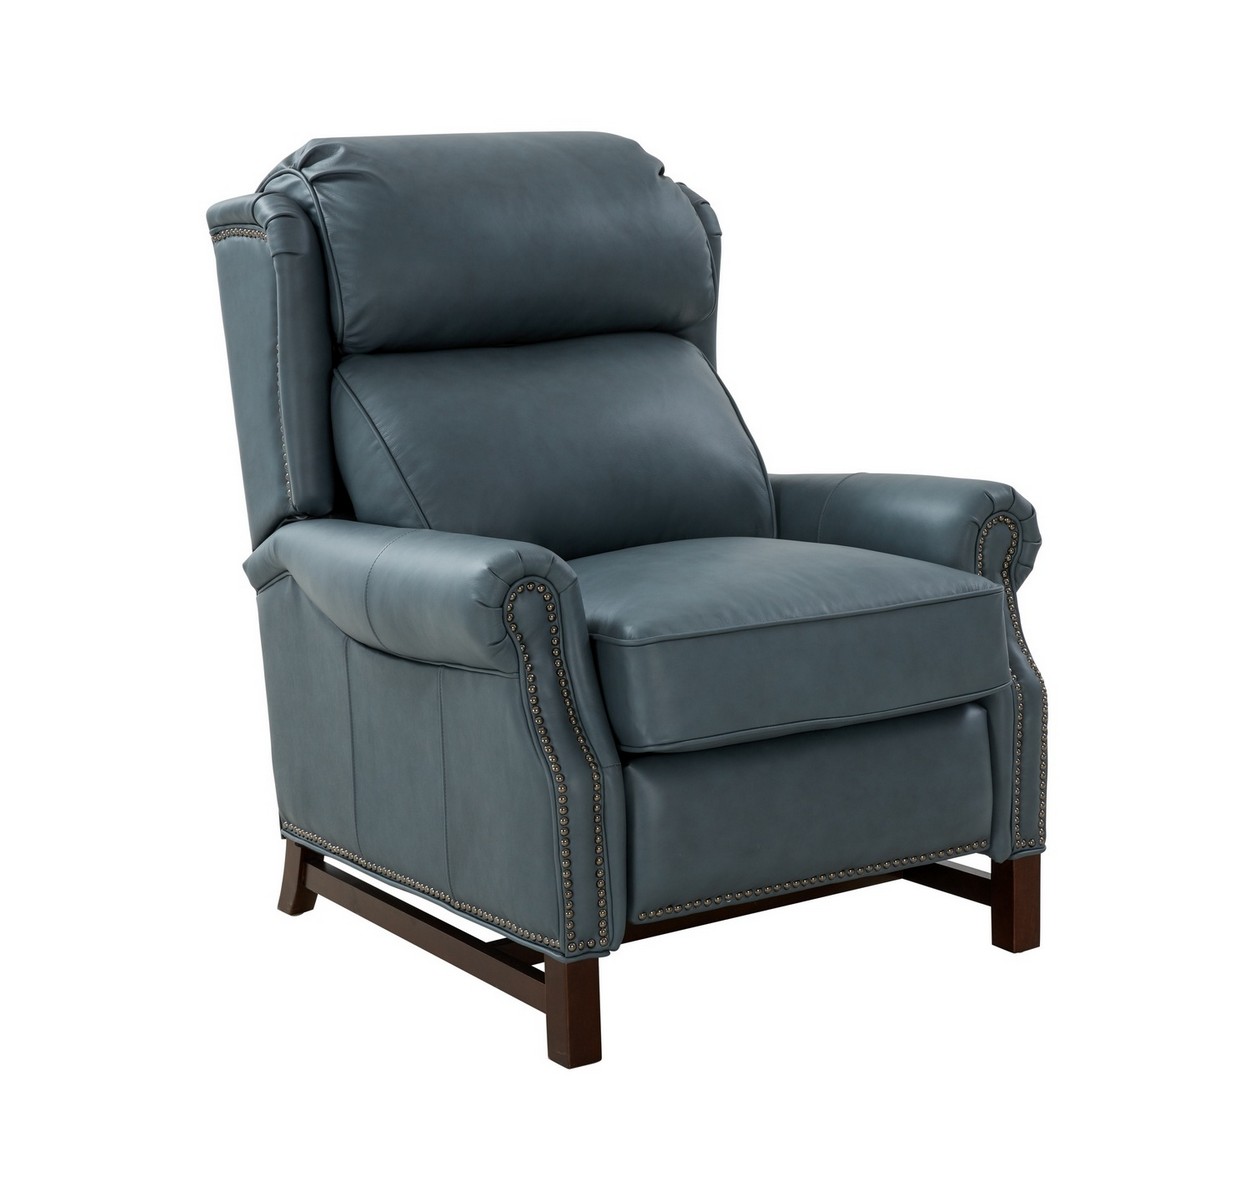 Barcalounger Thornfield Recliner Chair - Corbett Steel Gray/All Leather